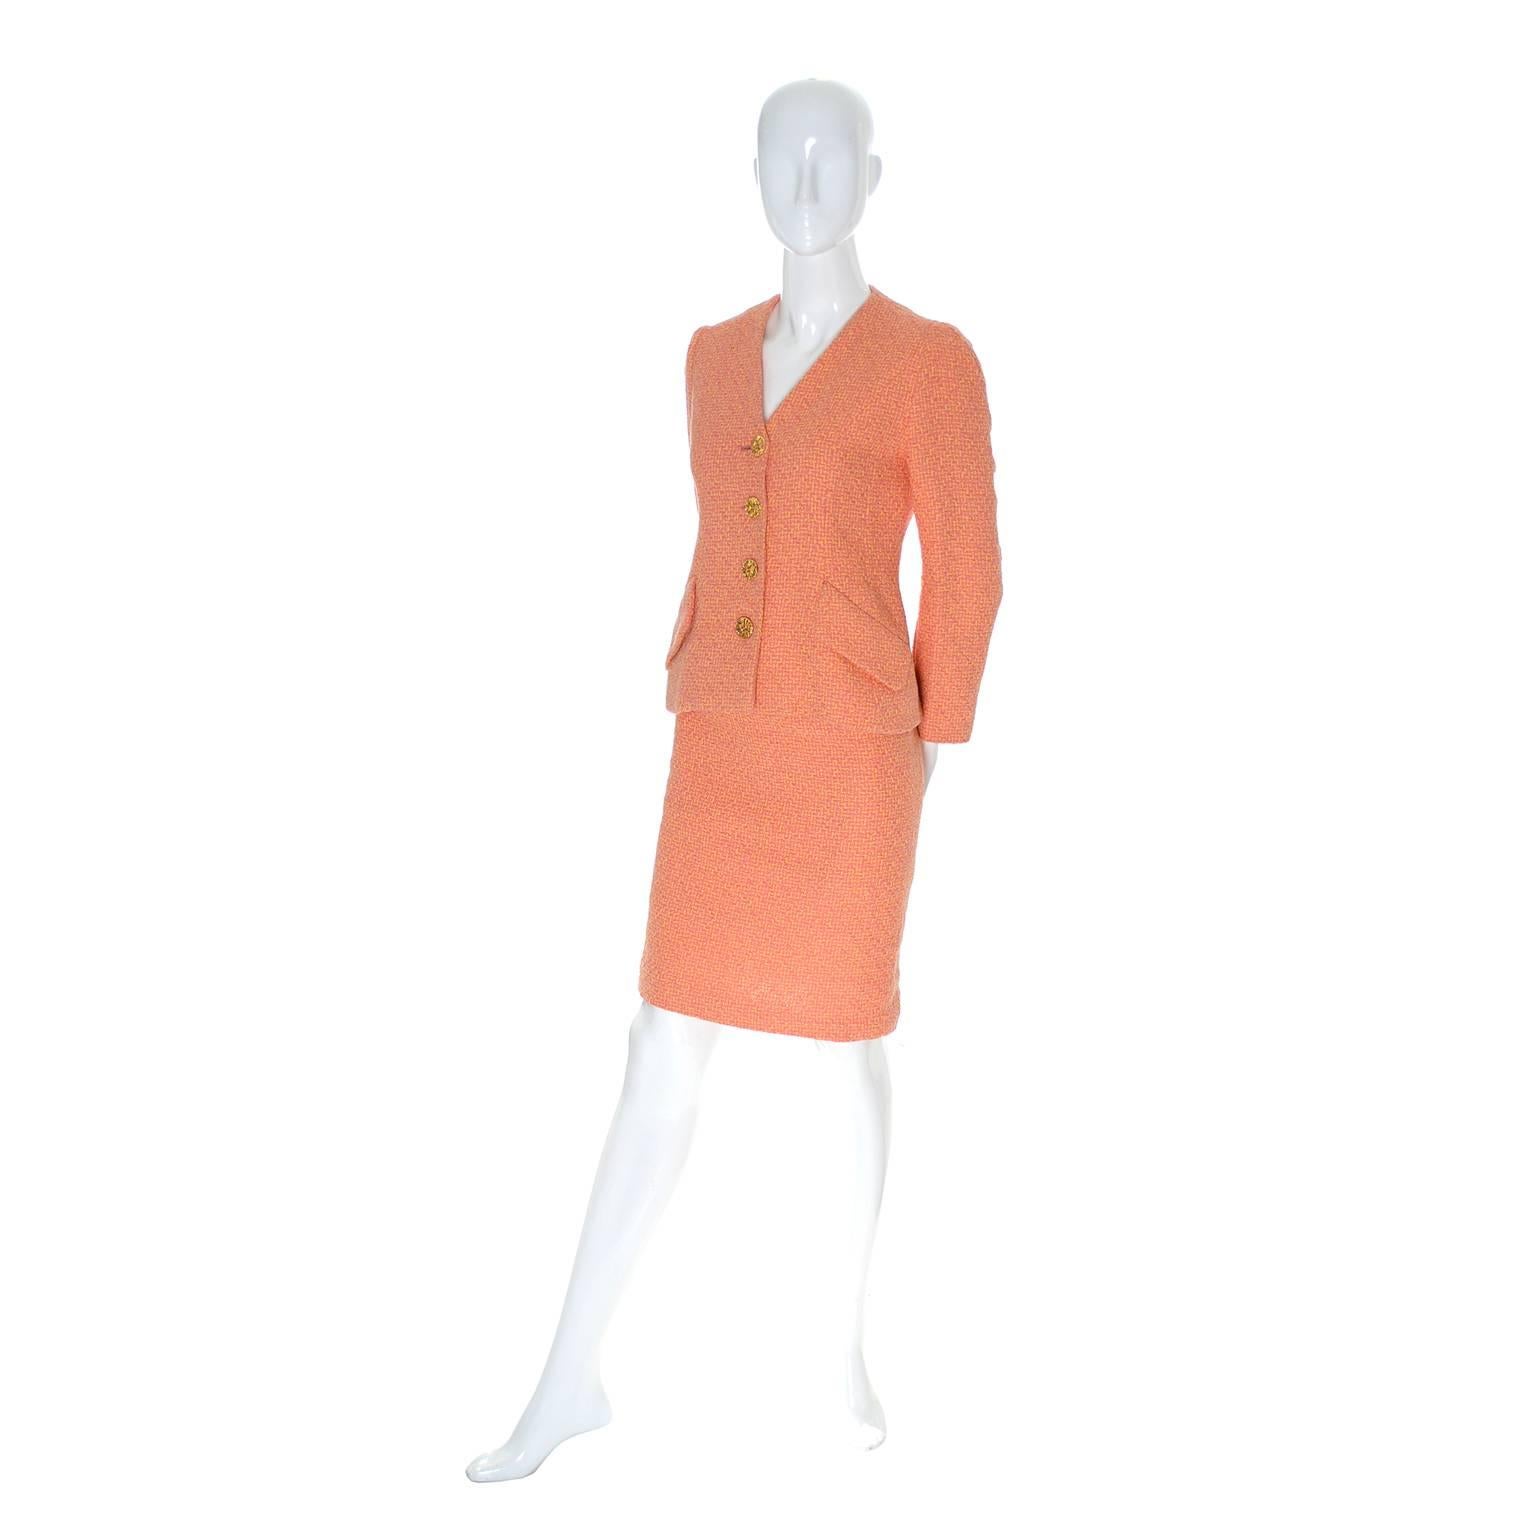 orange skirt suit